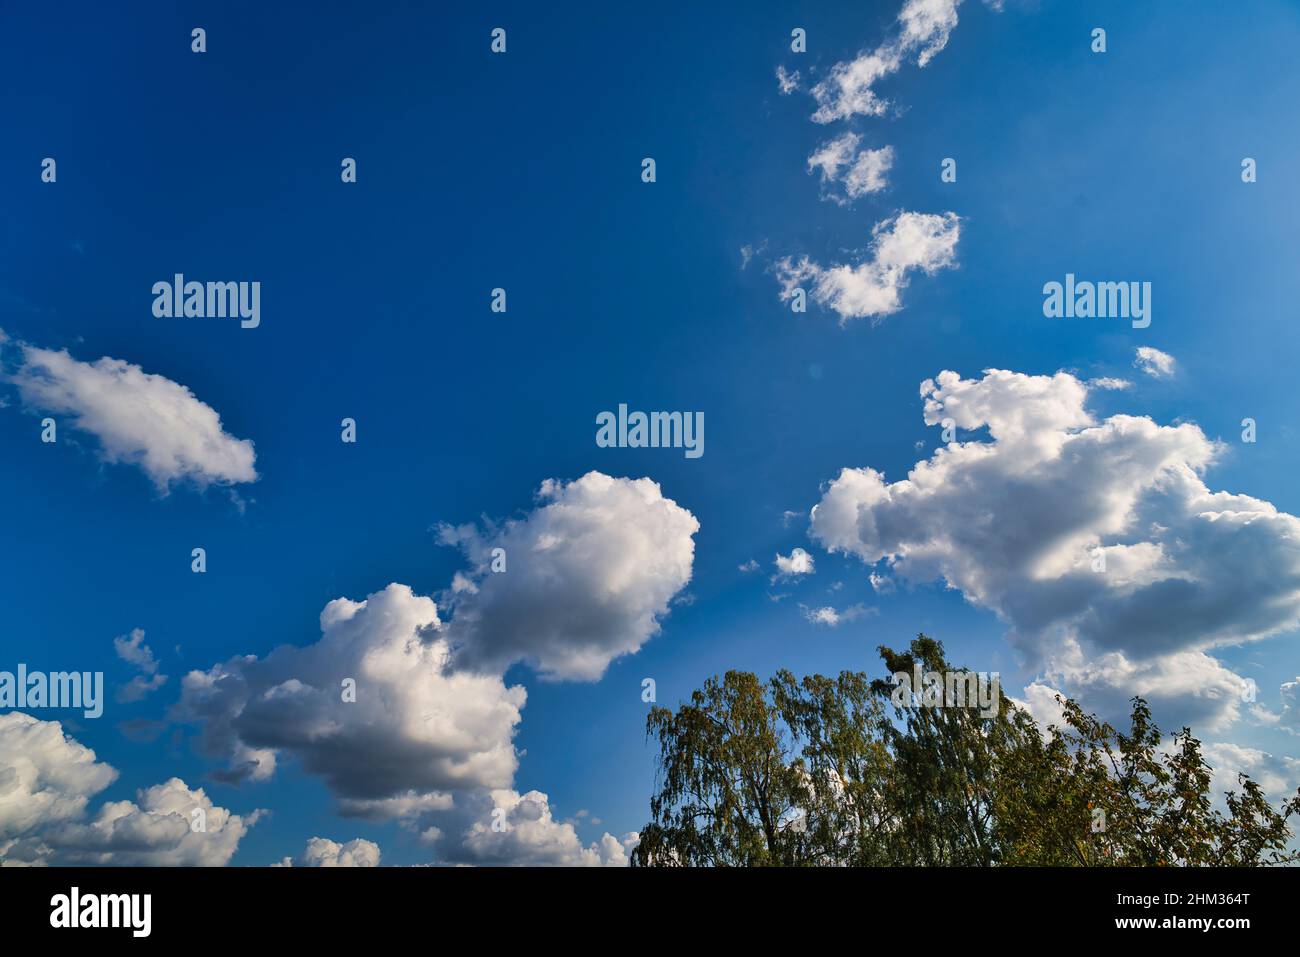 fond bleu ciel avec de petits nuages et un arbre Banque D'Images